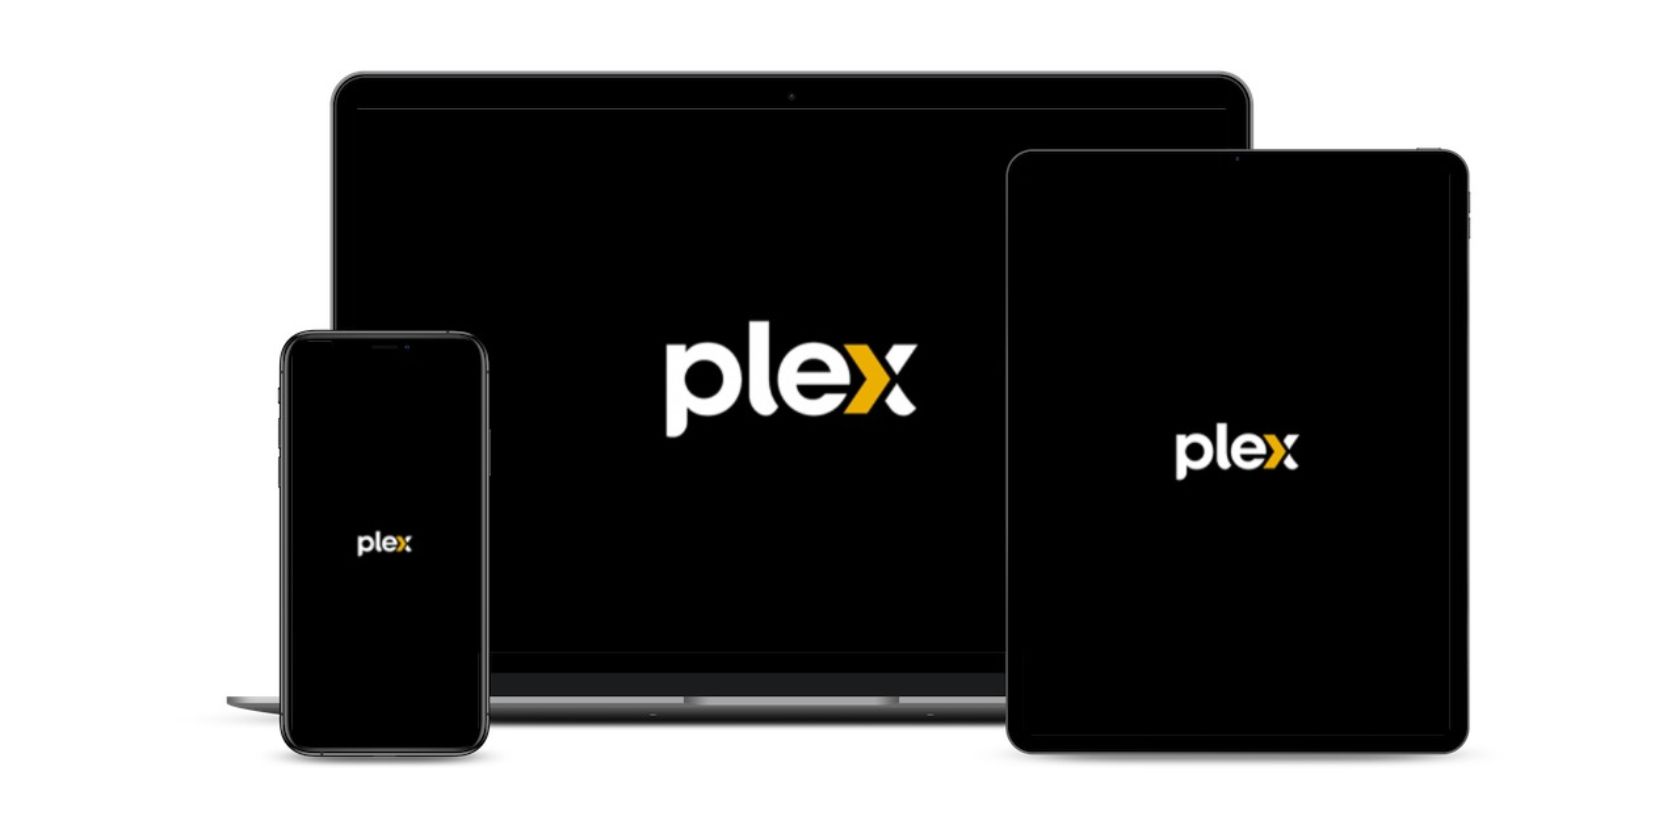 Plex on an iPhone, iPad, and Mac